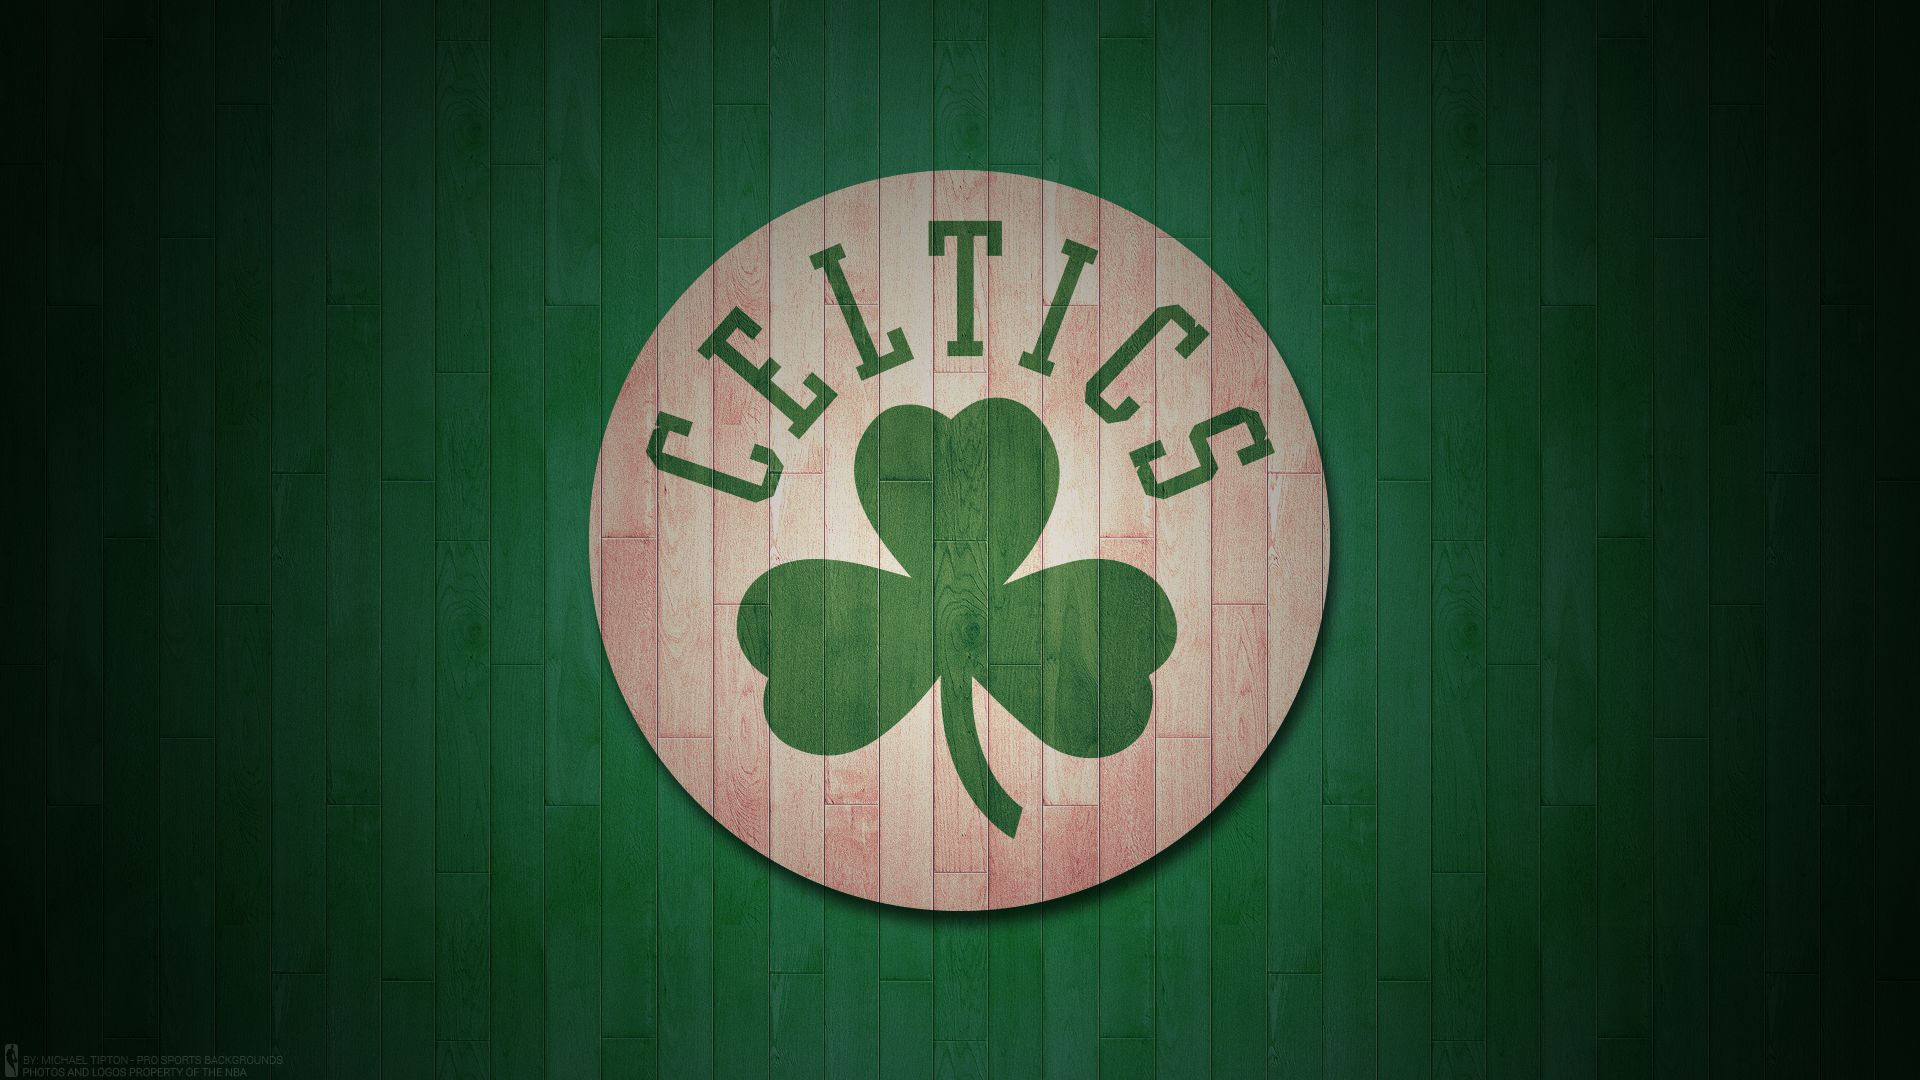 boston celtics, sports, basketball, logo, nba